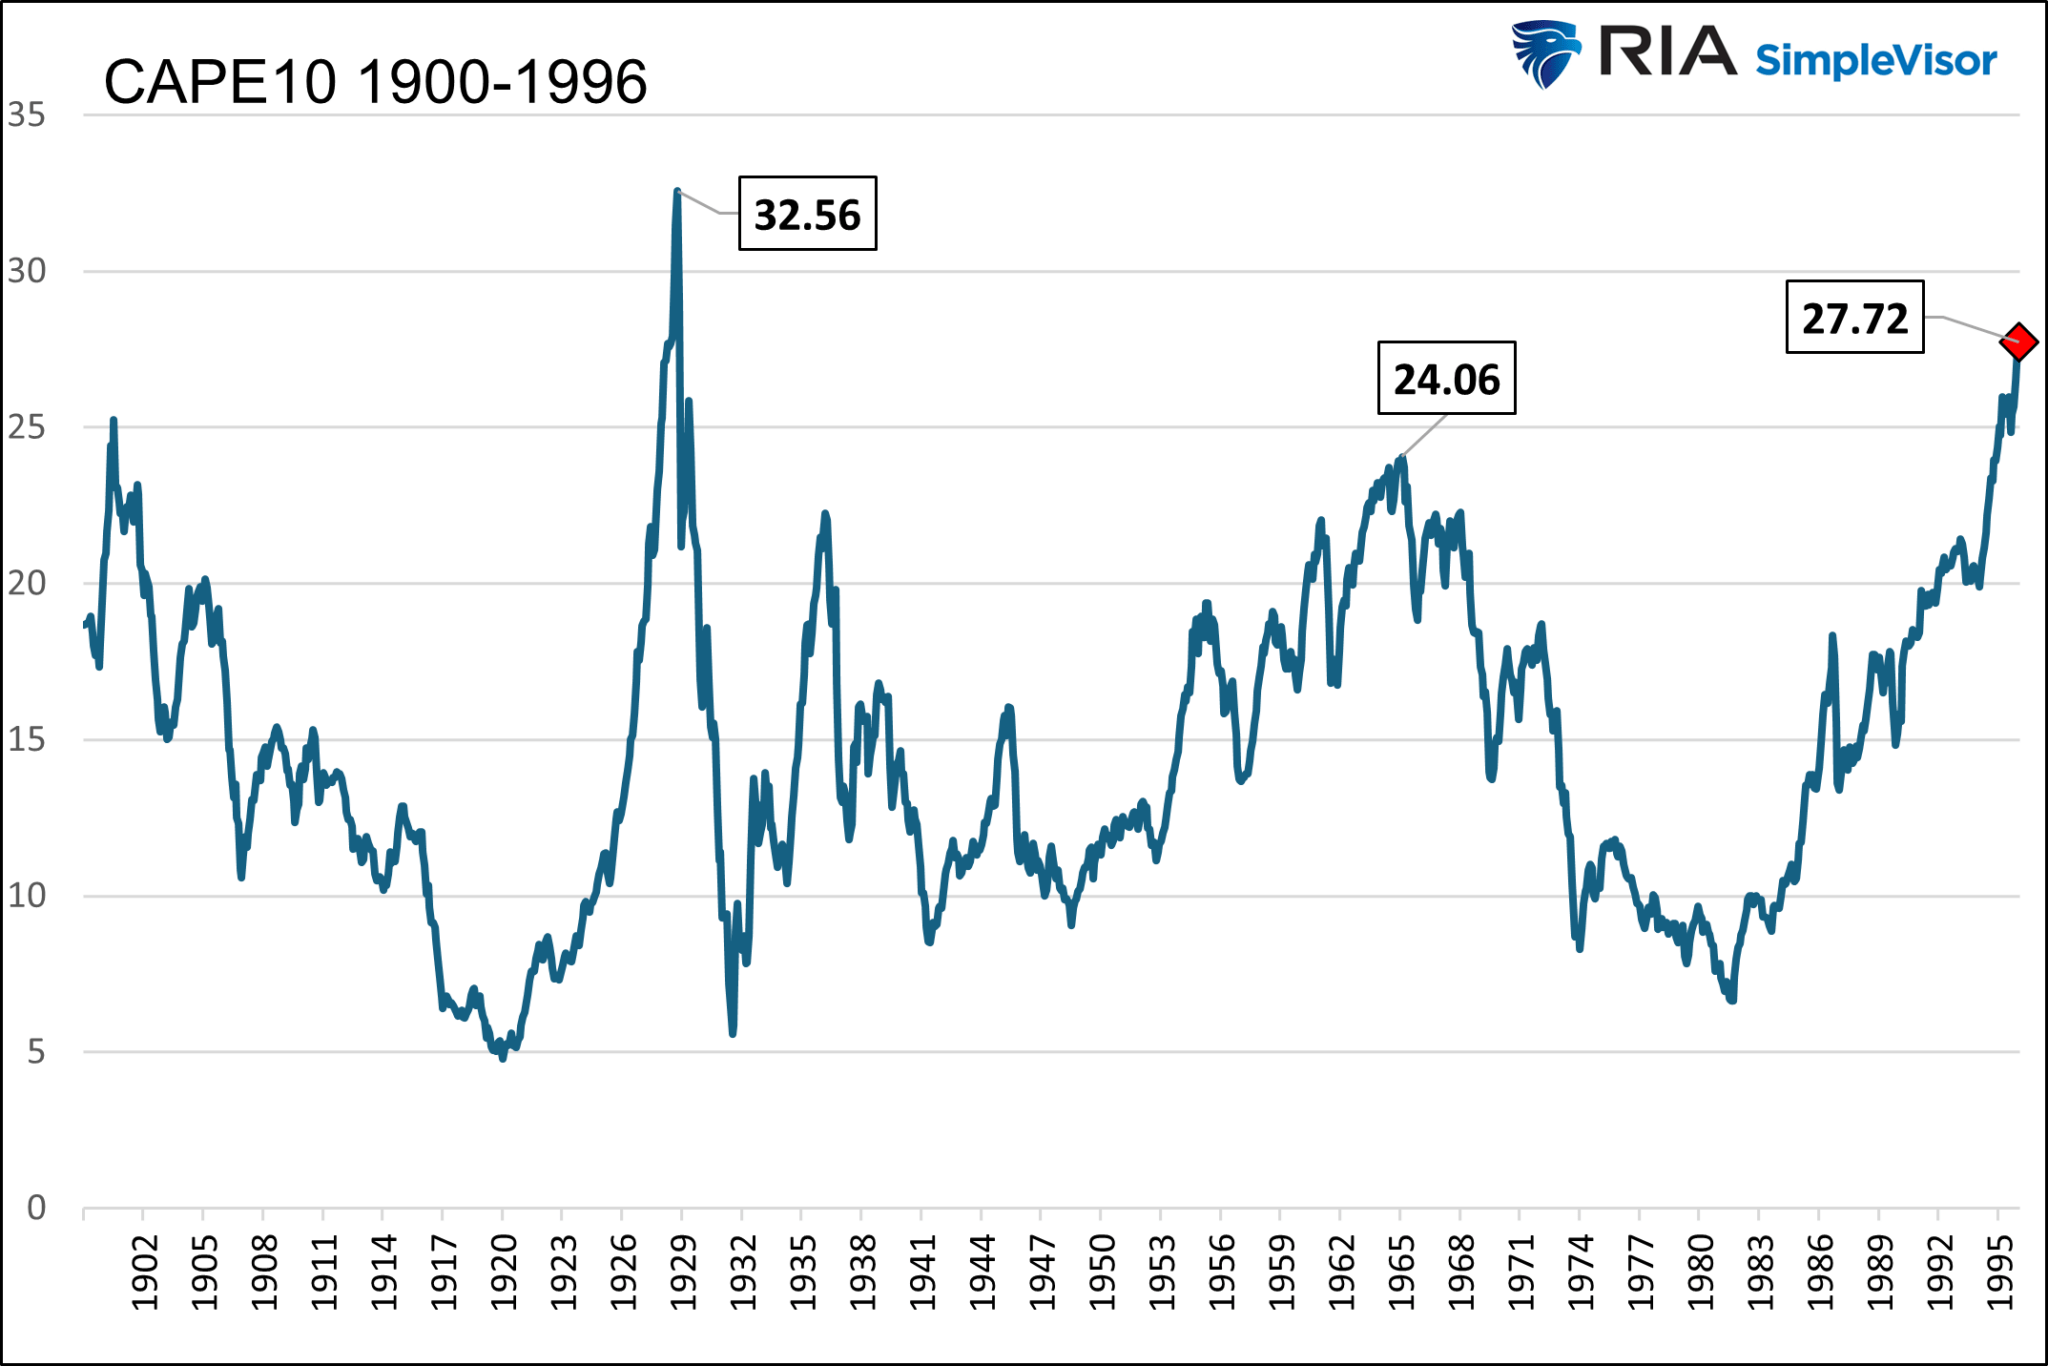 CAPE Valuation-1900-1996